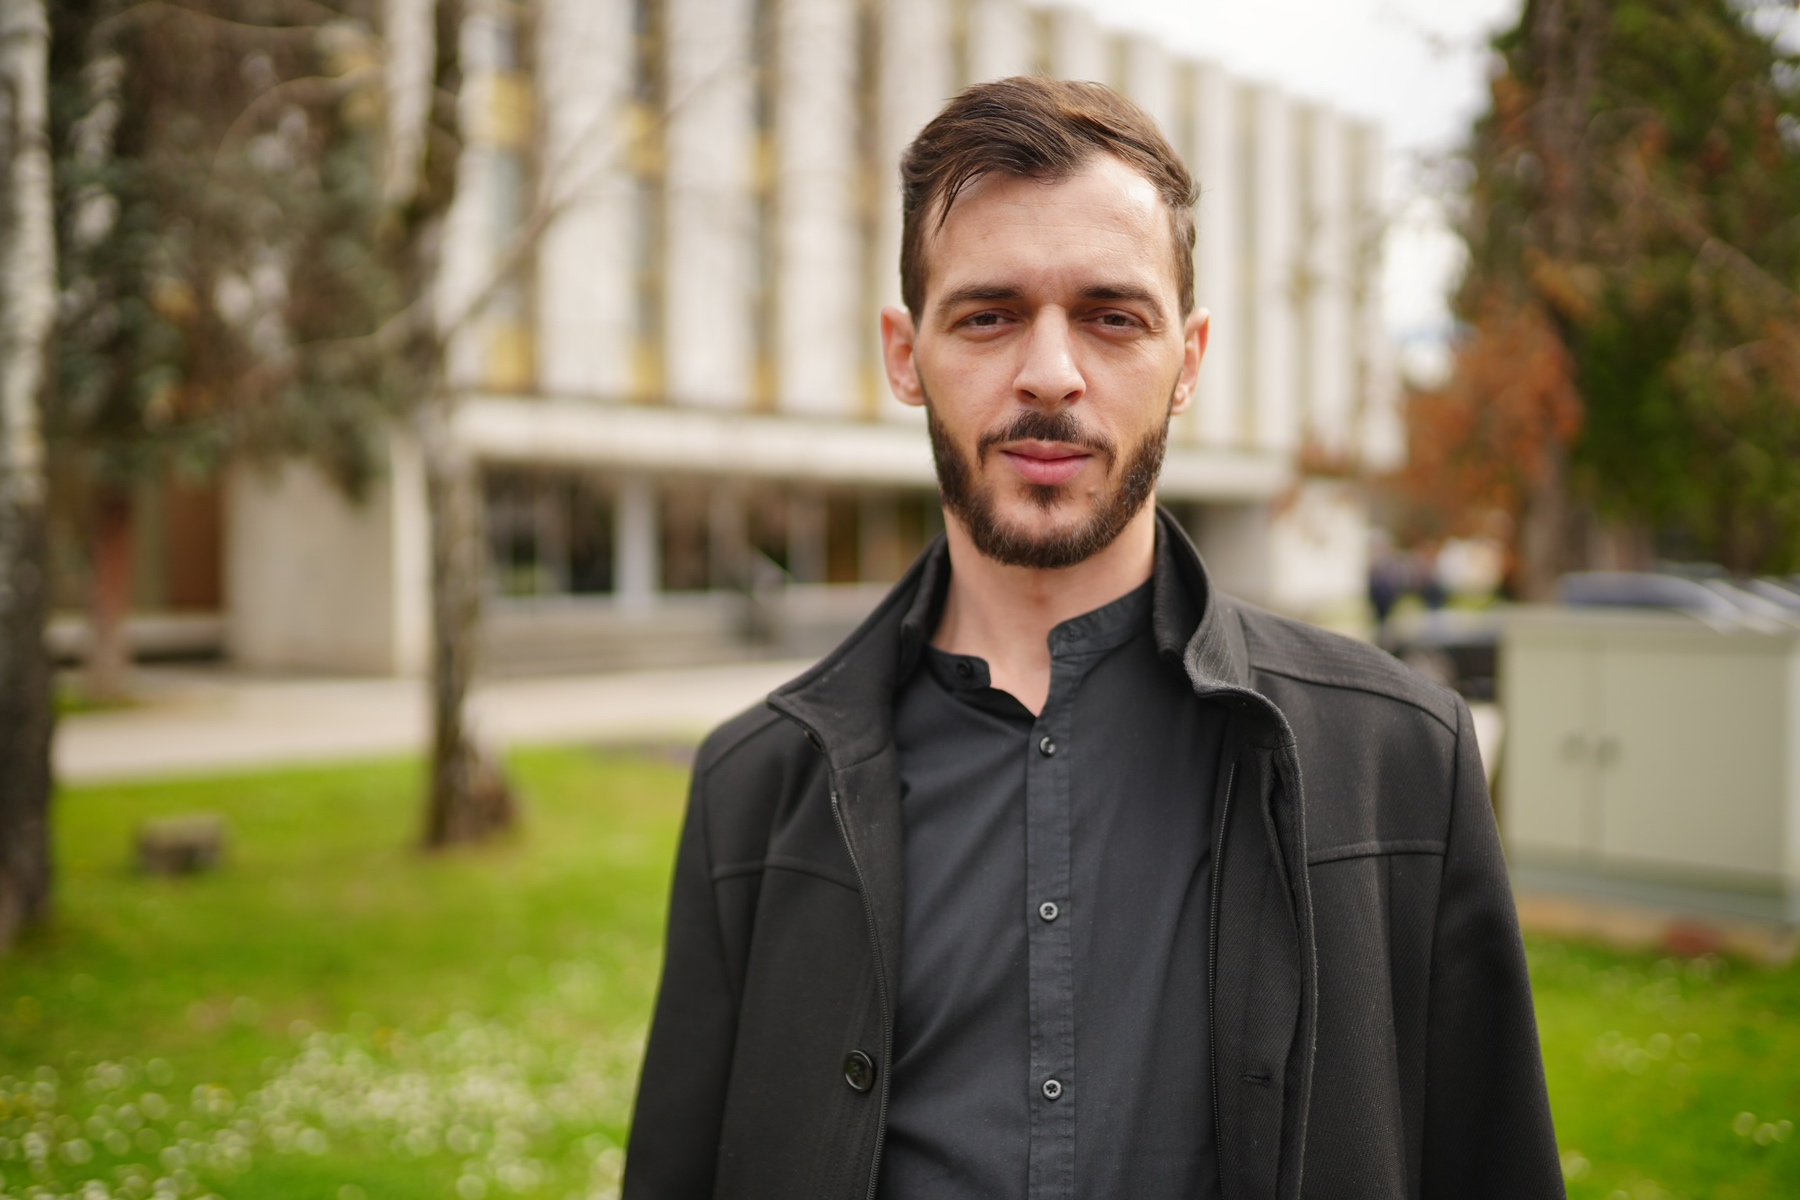 Osnivač Radničkog pokreta Dražan Pejaković za Blink: Kriminalizacija klevete obesmisliće borbu radnika za prava (VIDEO)